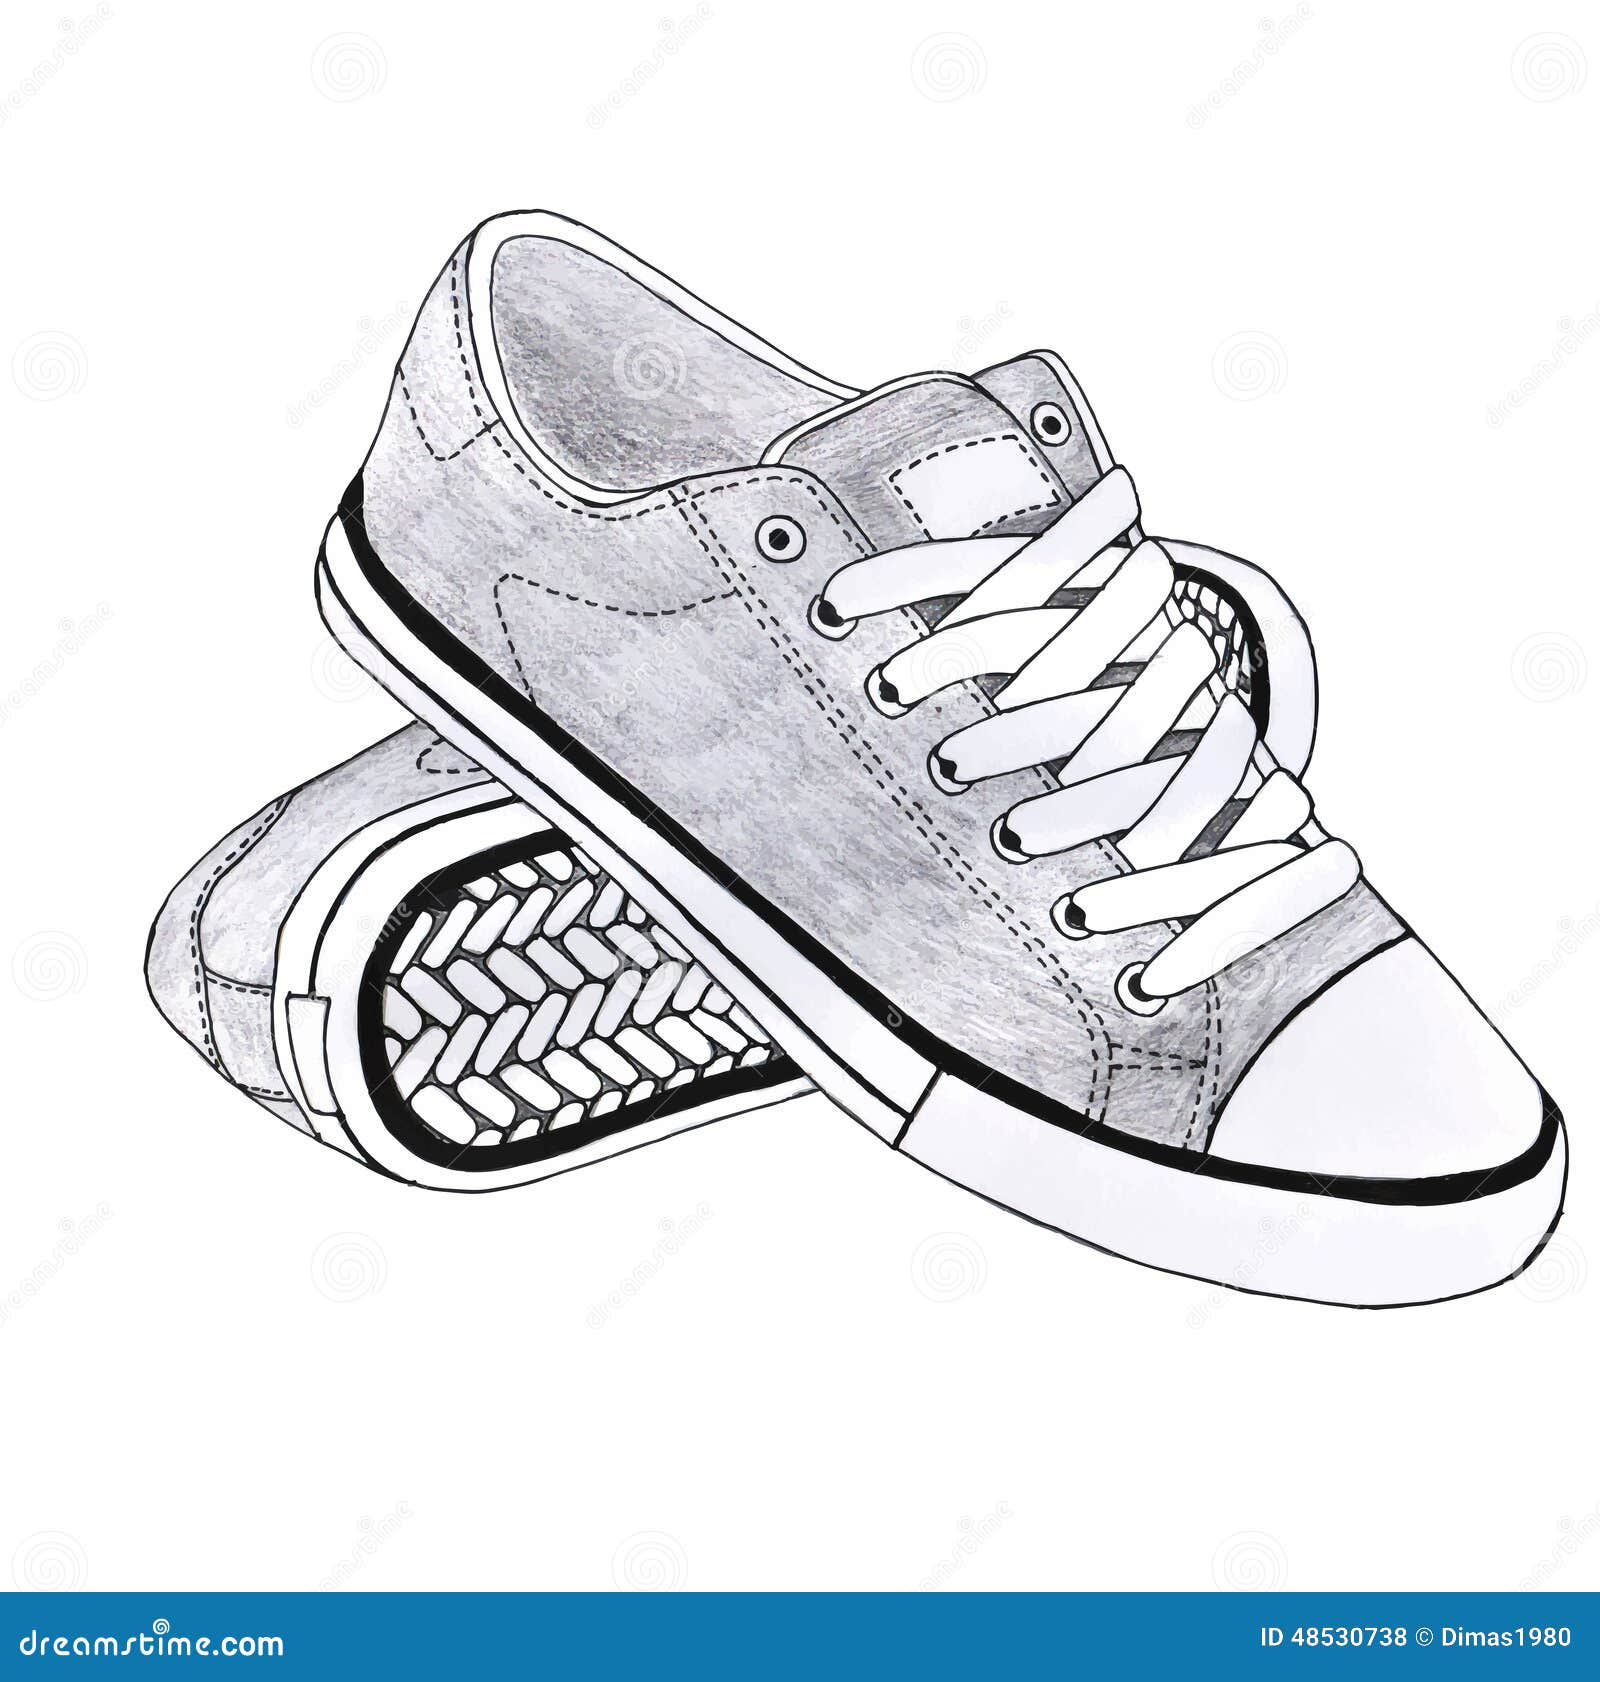 pencil sketch of shoes